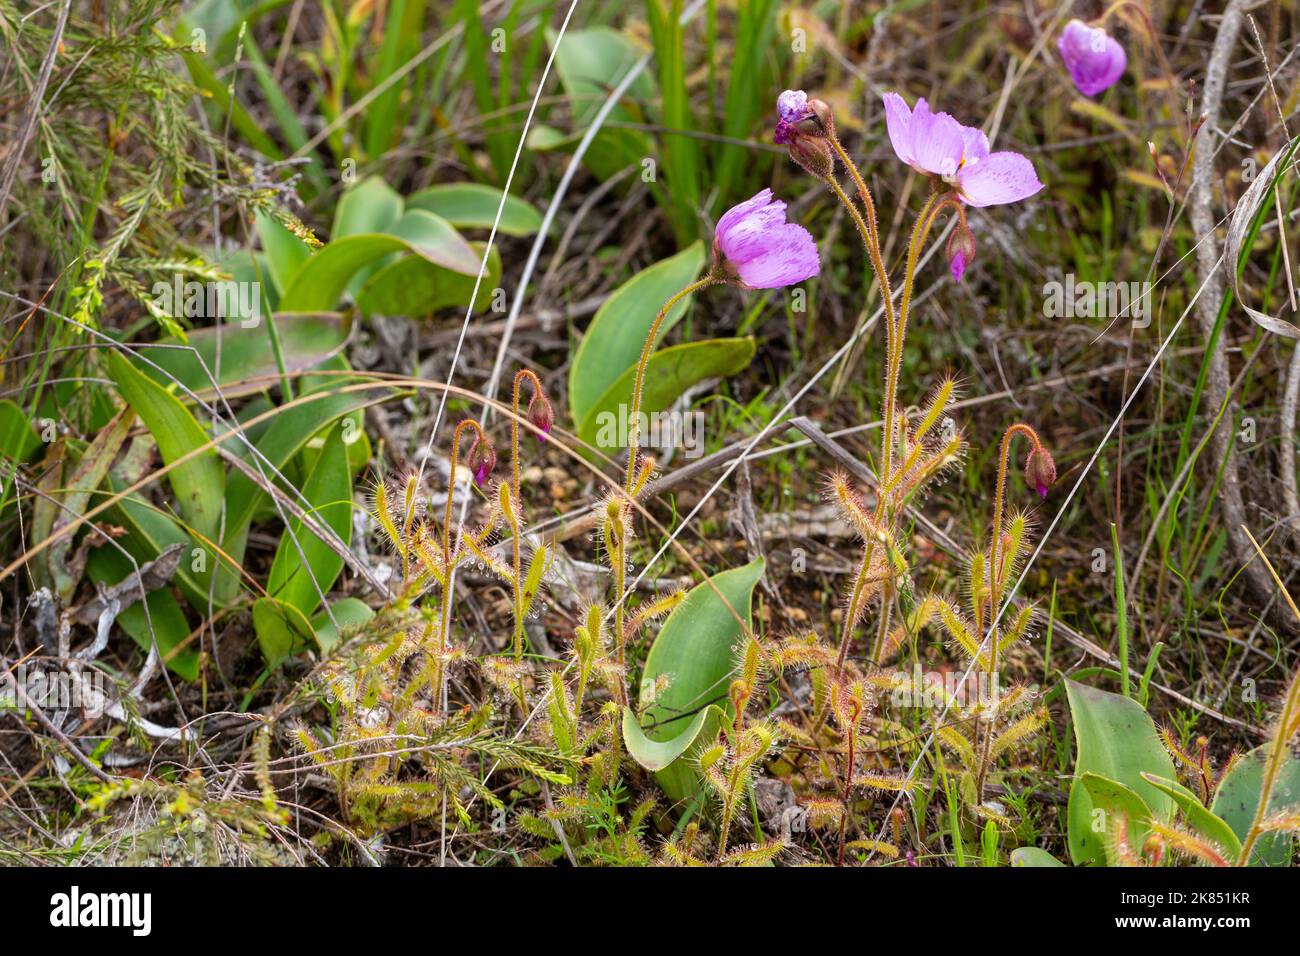 Group of some flowering Sundews (Drosera cistiflora) in natural habitat Stock Photo